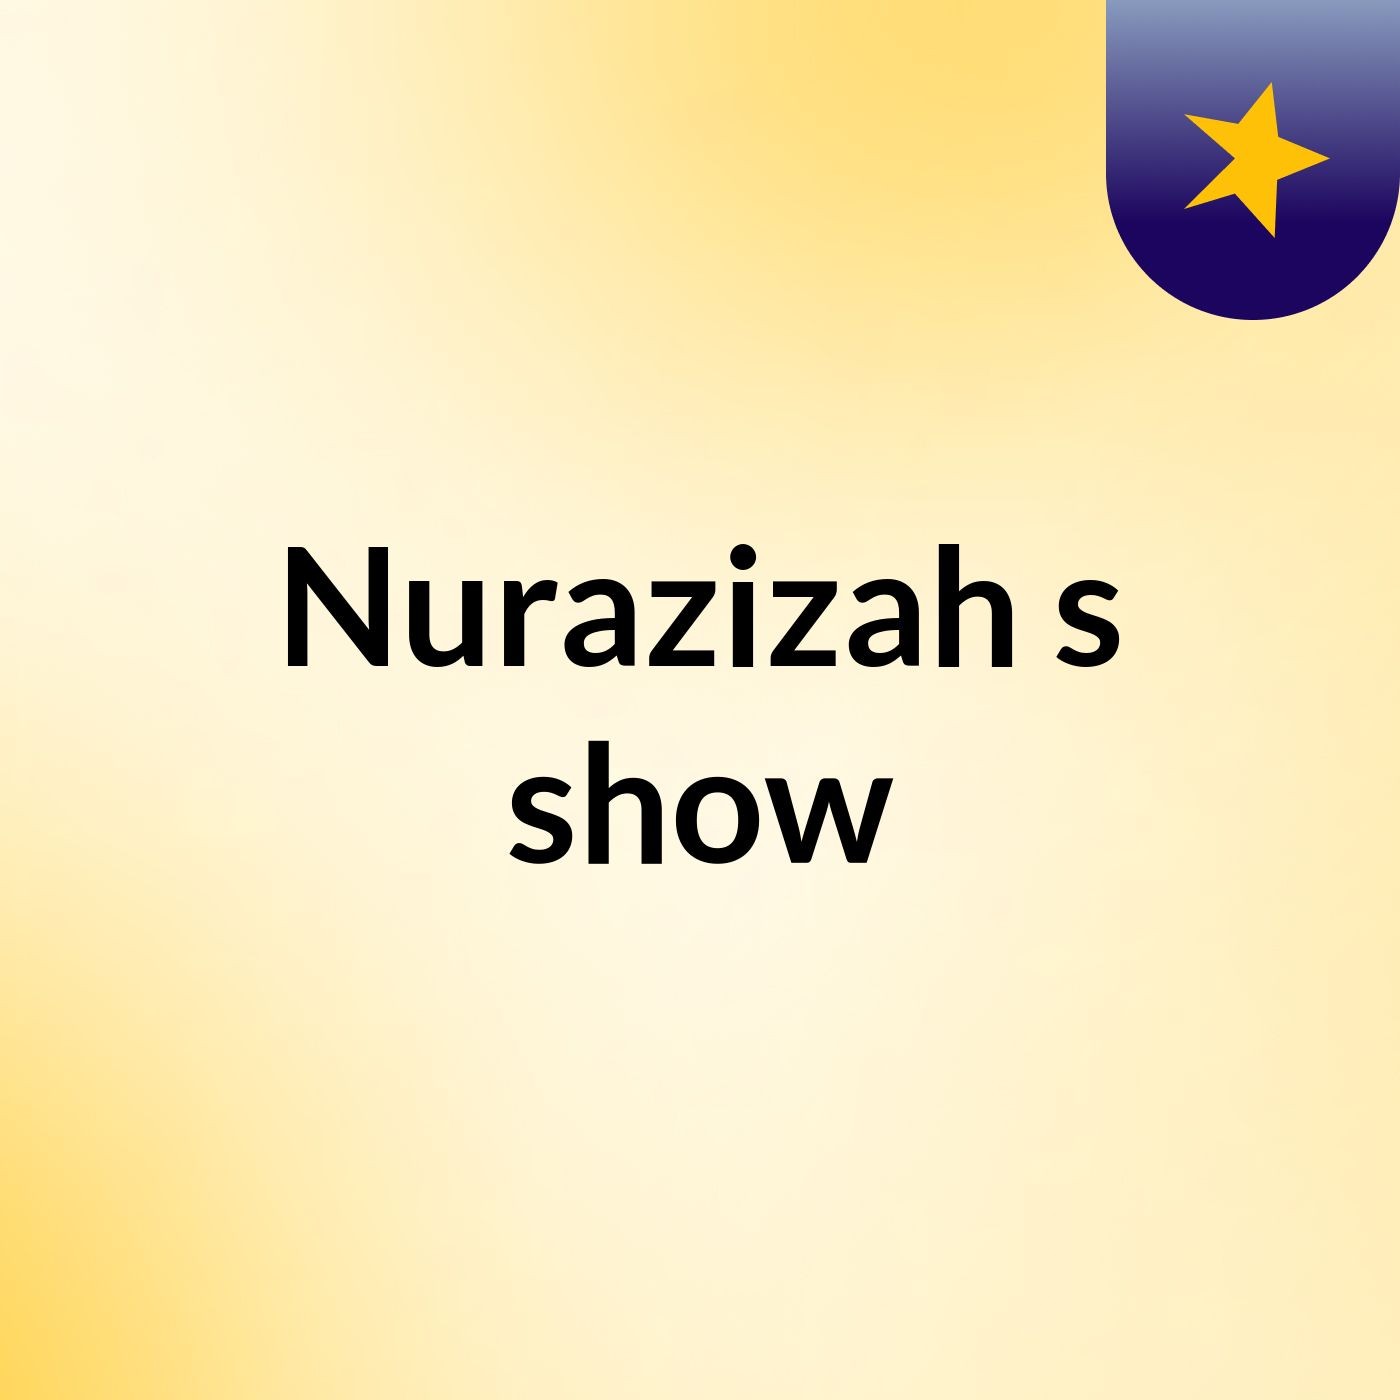 Nurazizah's show